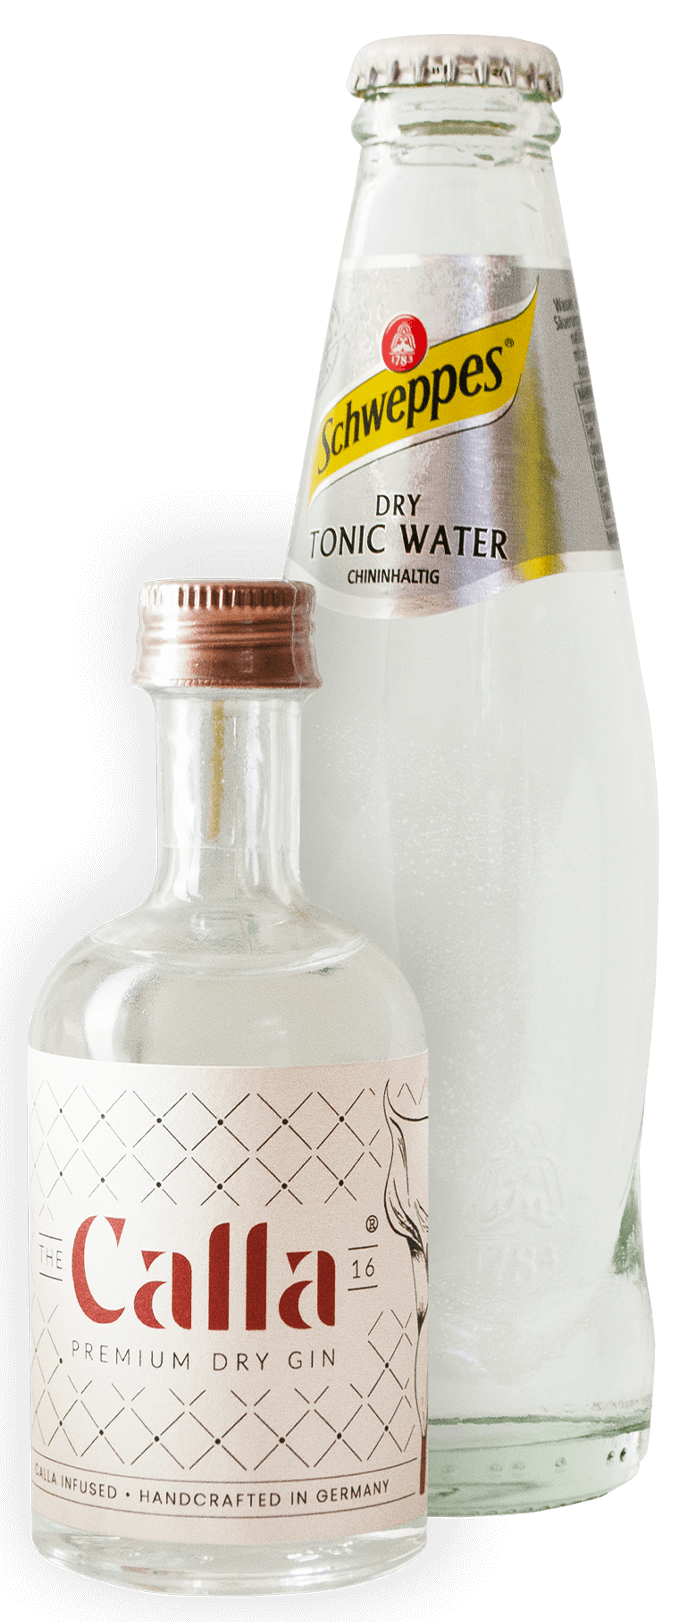 The Calla 16® Premium Dry Gin - BIO & Schweppes Dry Tonic Water